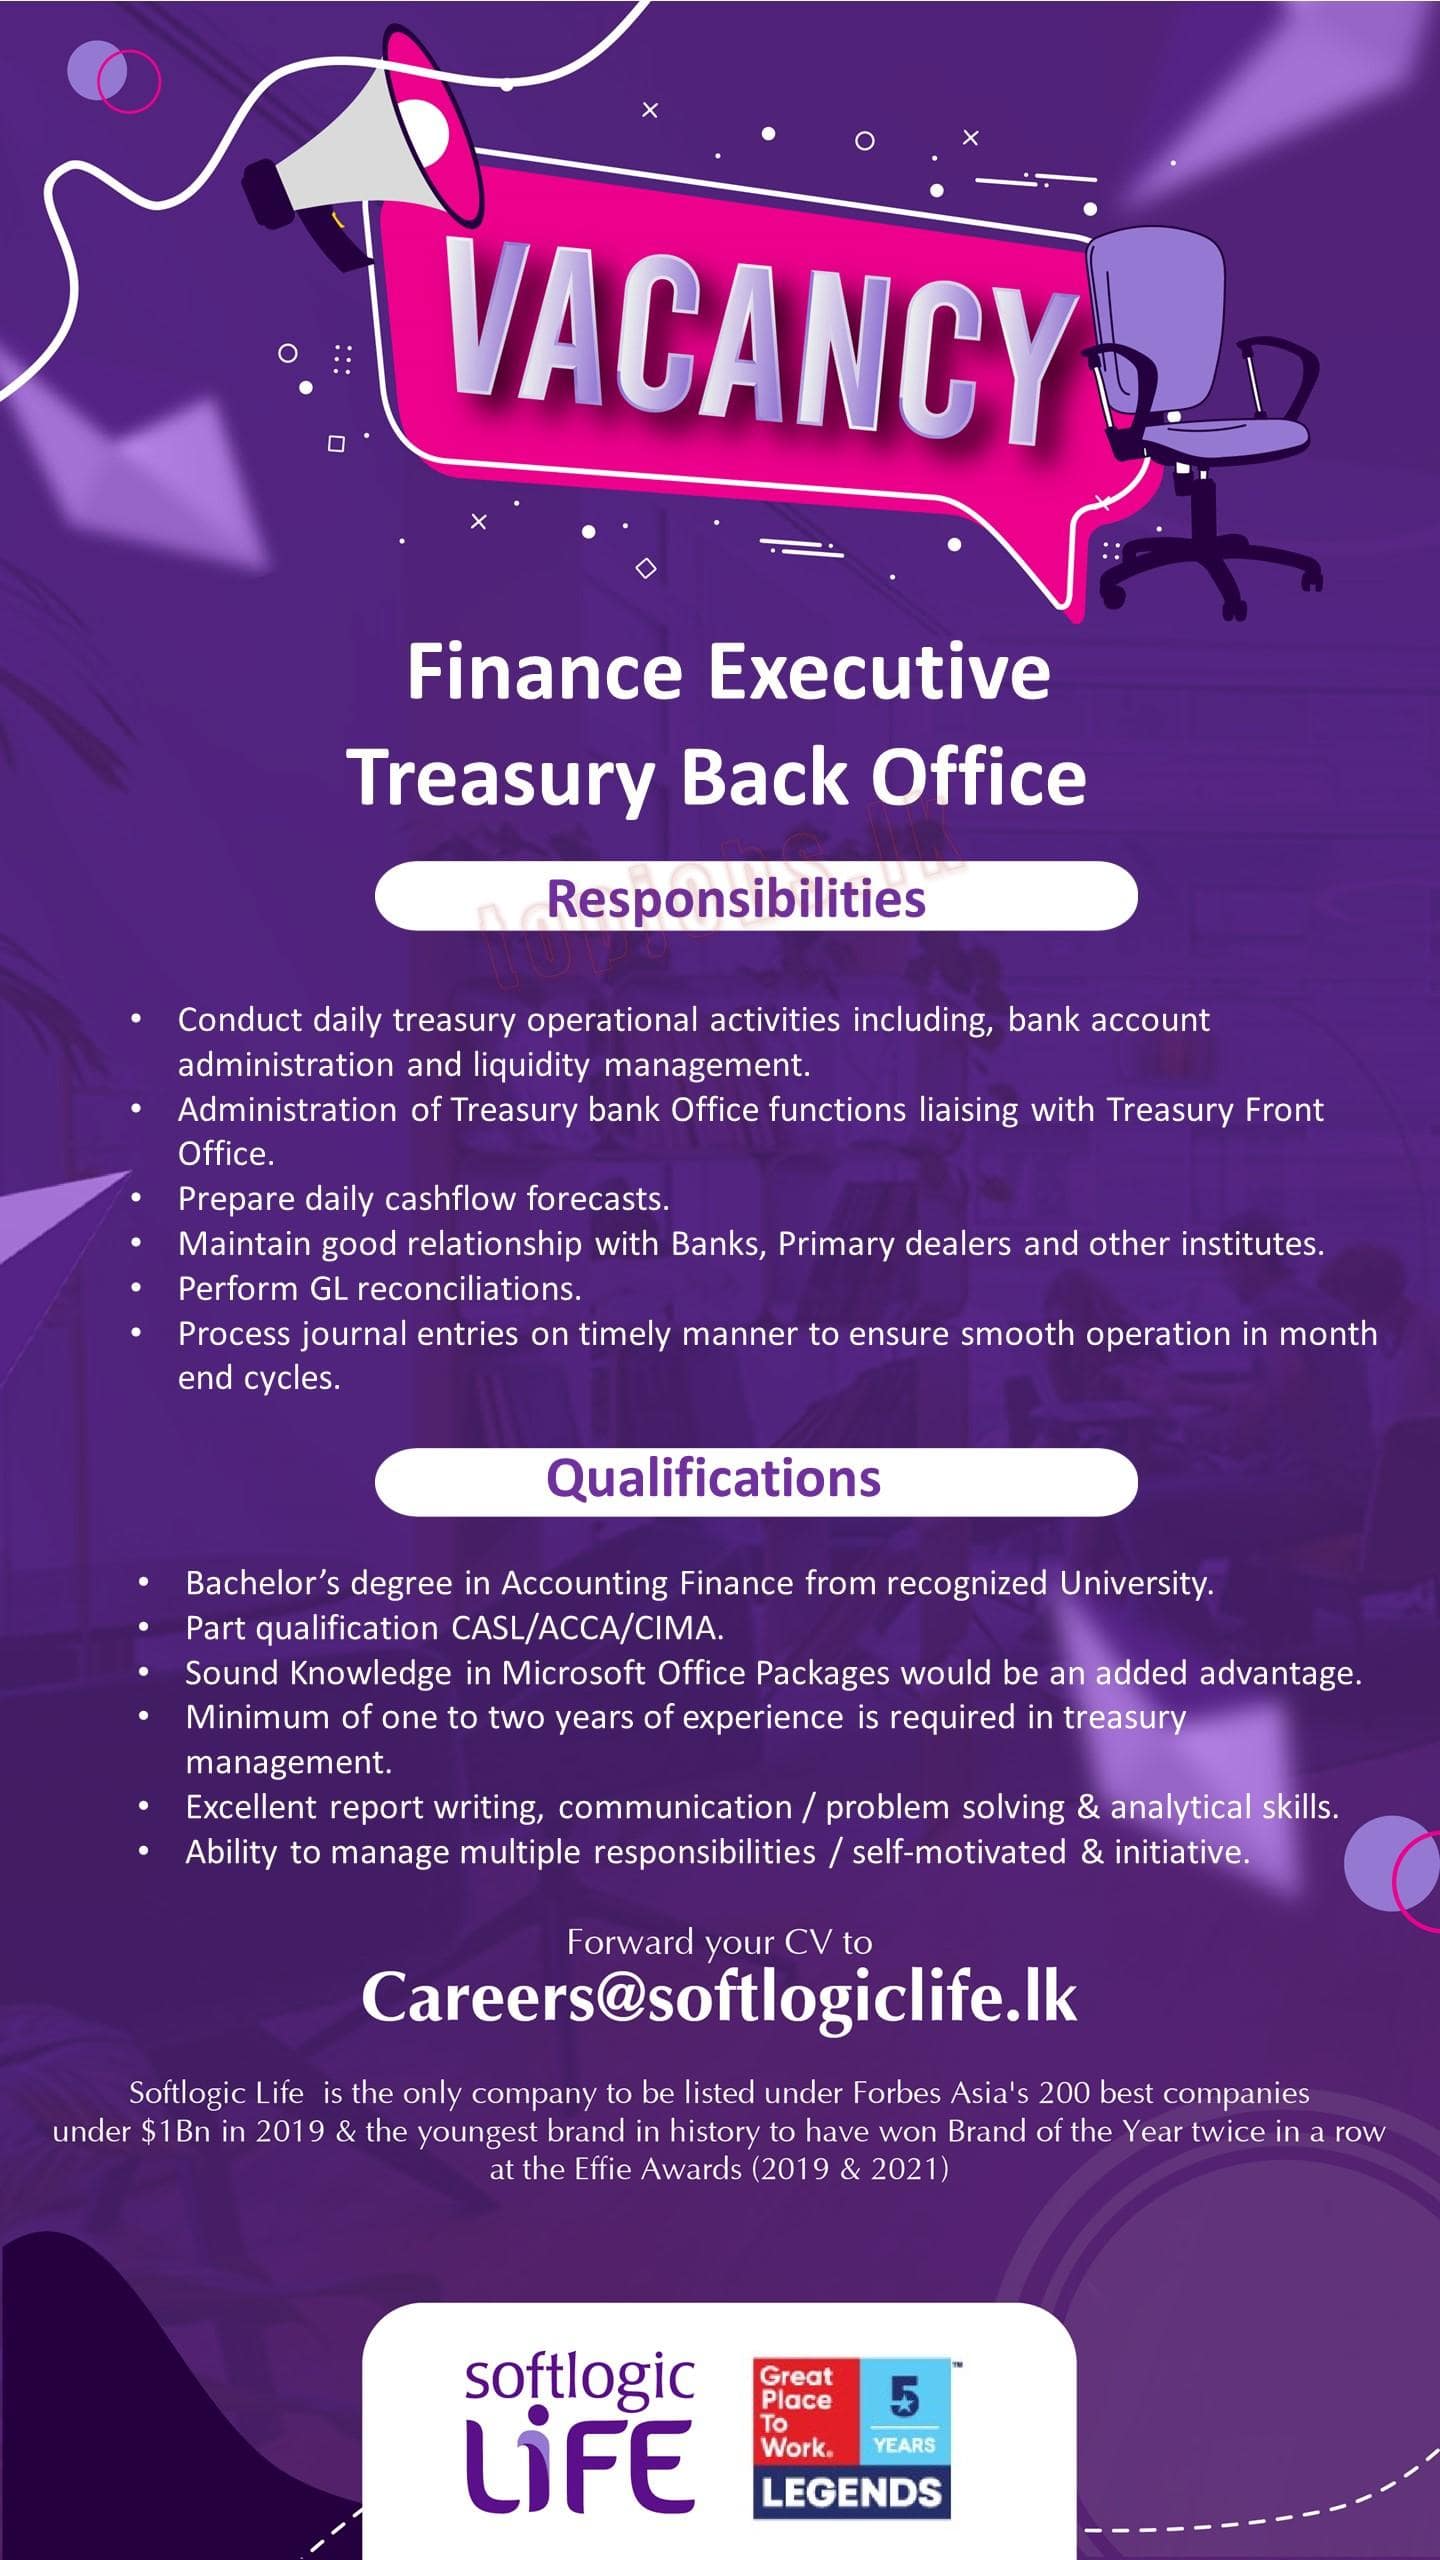 Finance Executive - Treasury Back Office Vacancy Softlogic Life Jobs Vacancies